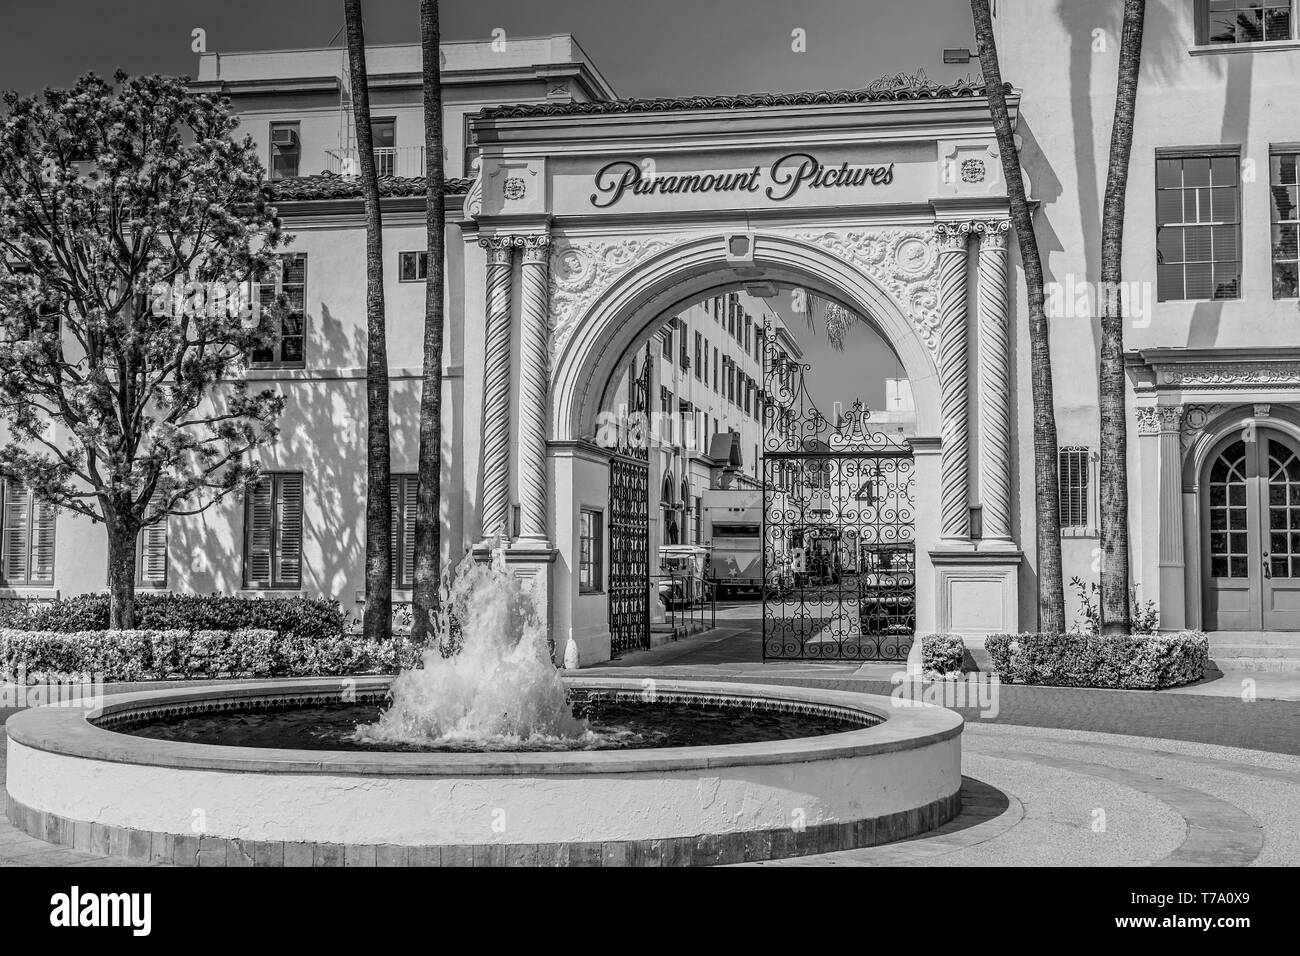 Paramount Pictures Film Studios in Los Angeles, Kalifornien, USA - 18. MÄRZ 2019 Stockfoto